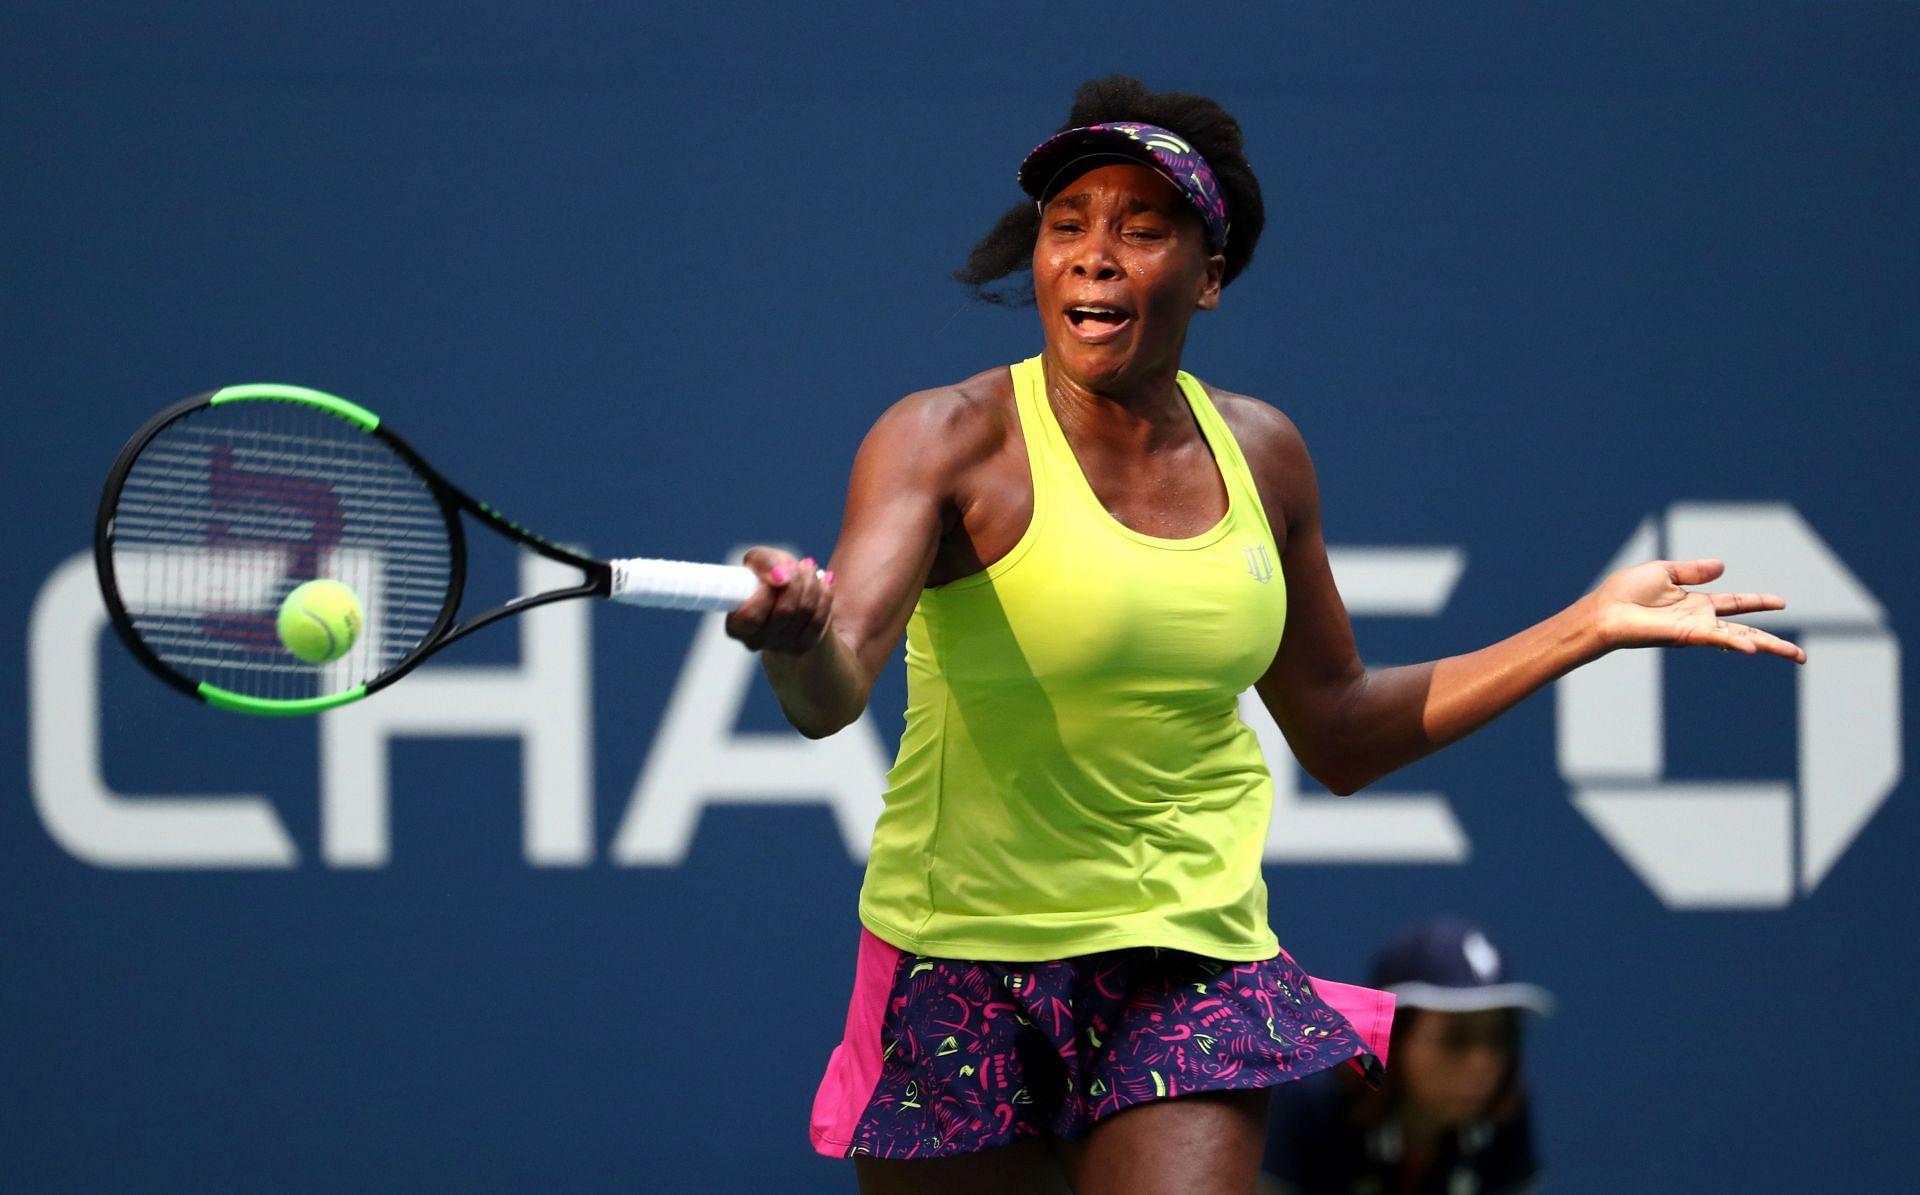 Venus Williams 2018 US Open - Day 1